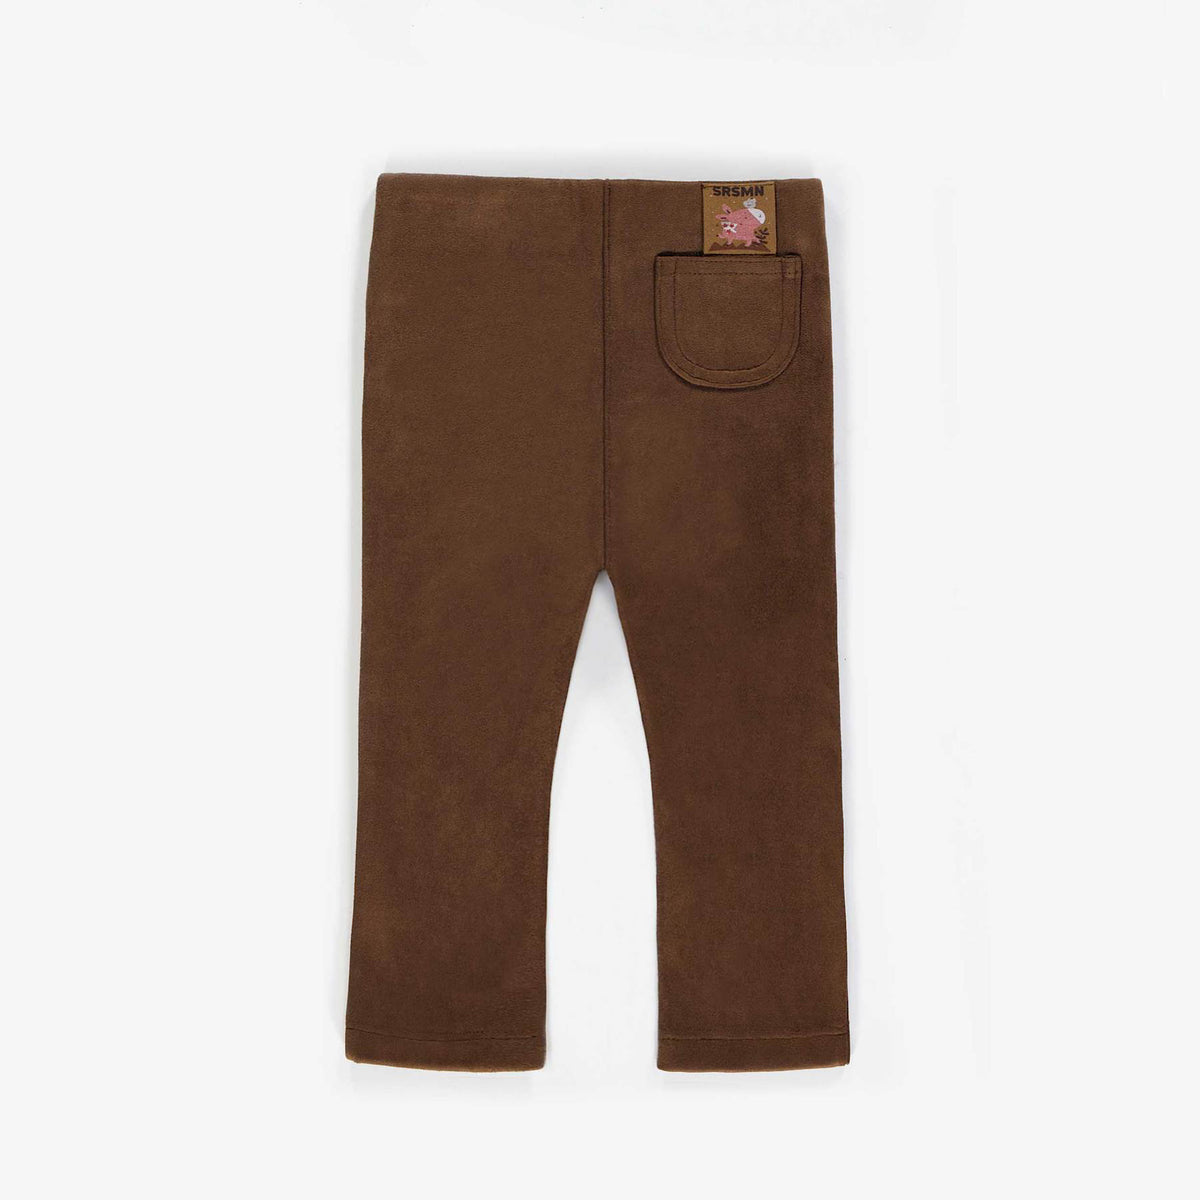 Brown Pants, Suede Effect